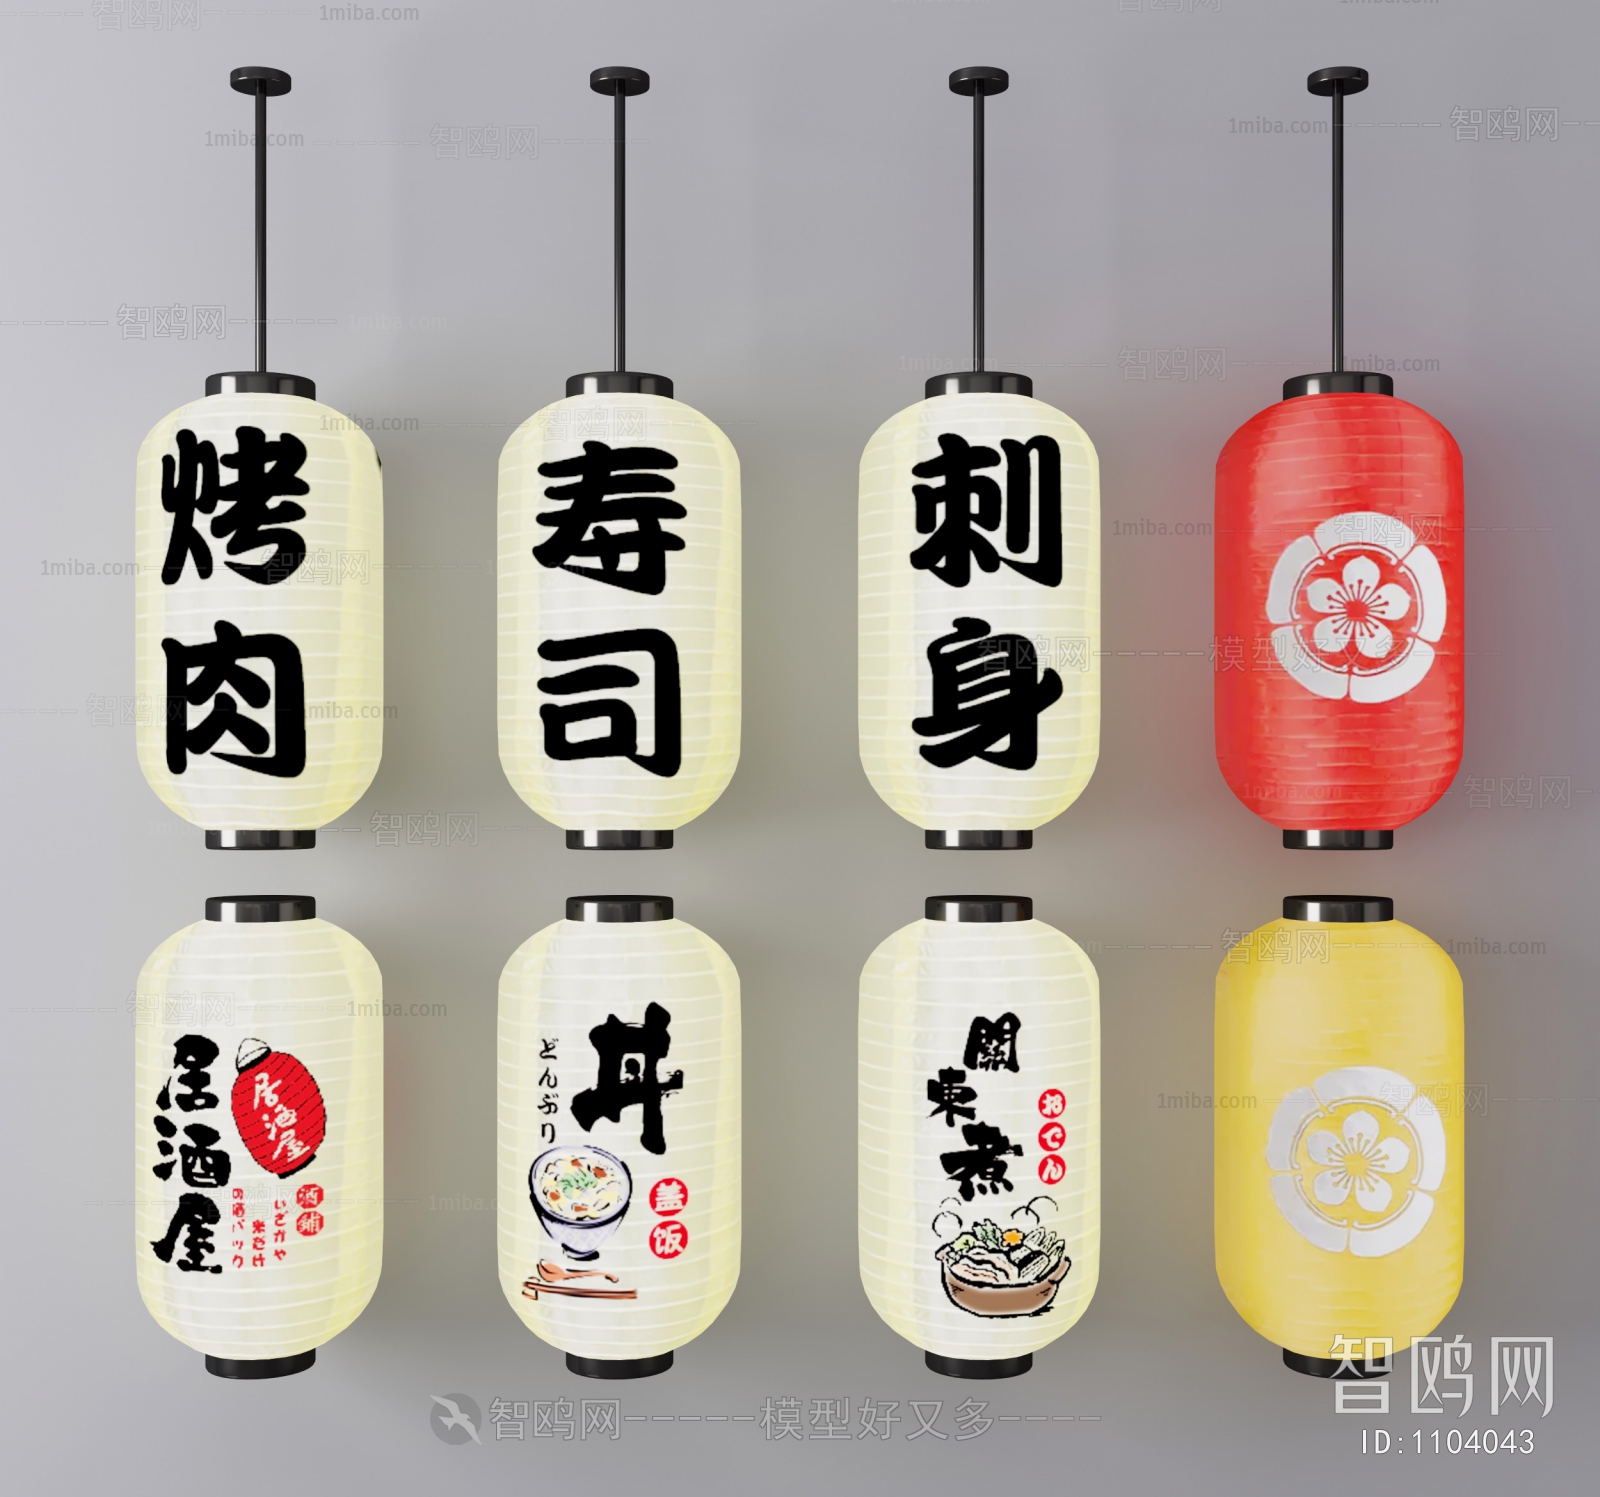 Japanese Style Lantern